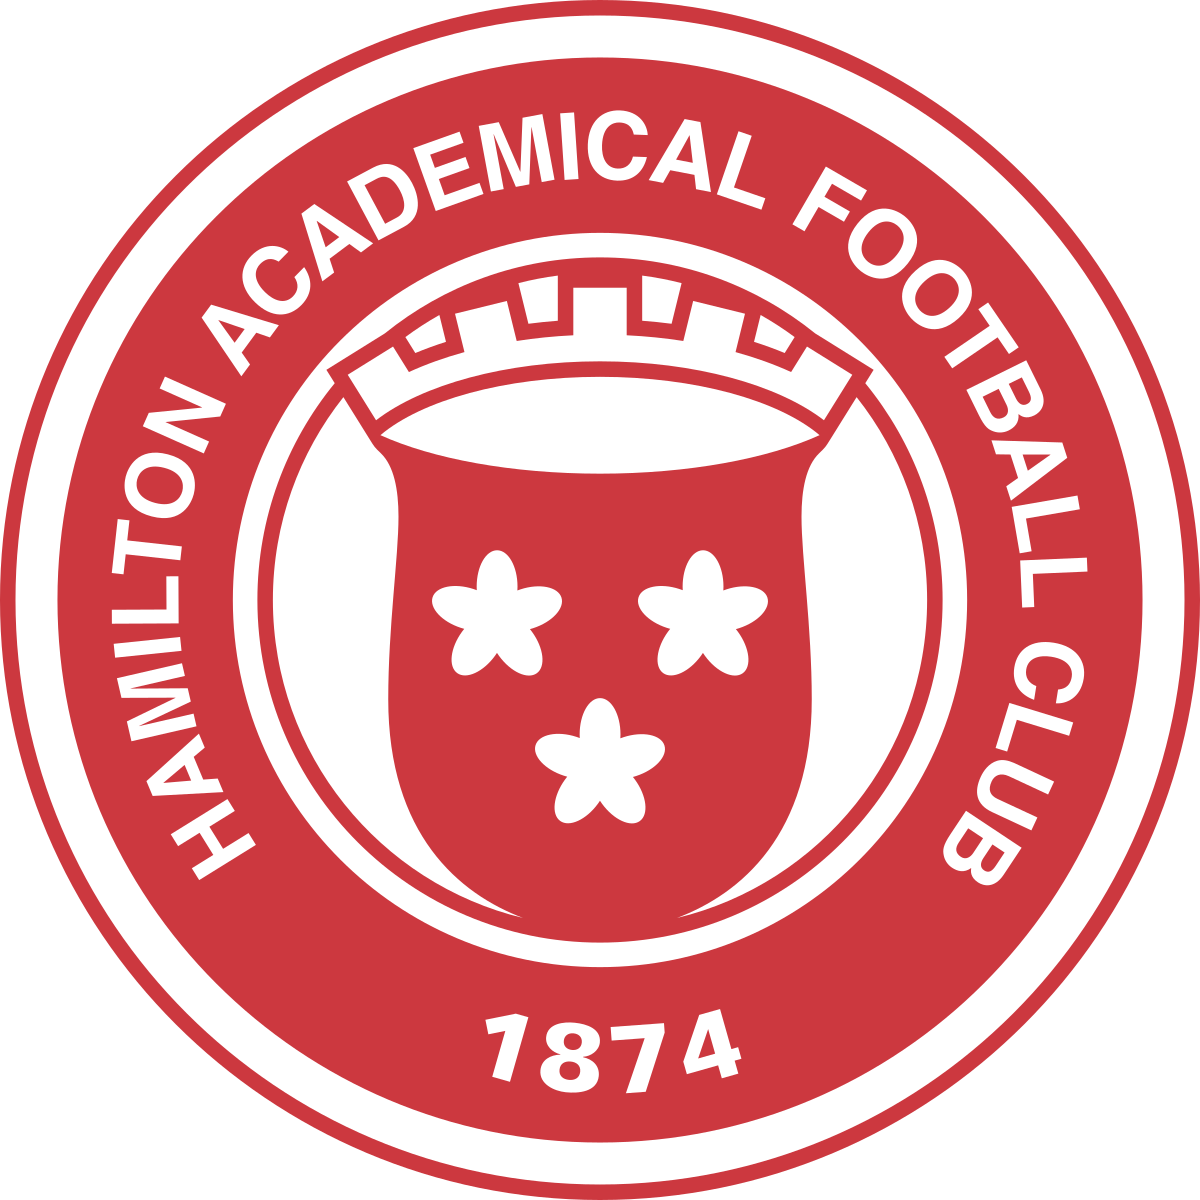 Hamilton Academical F.C.